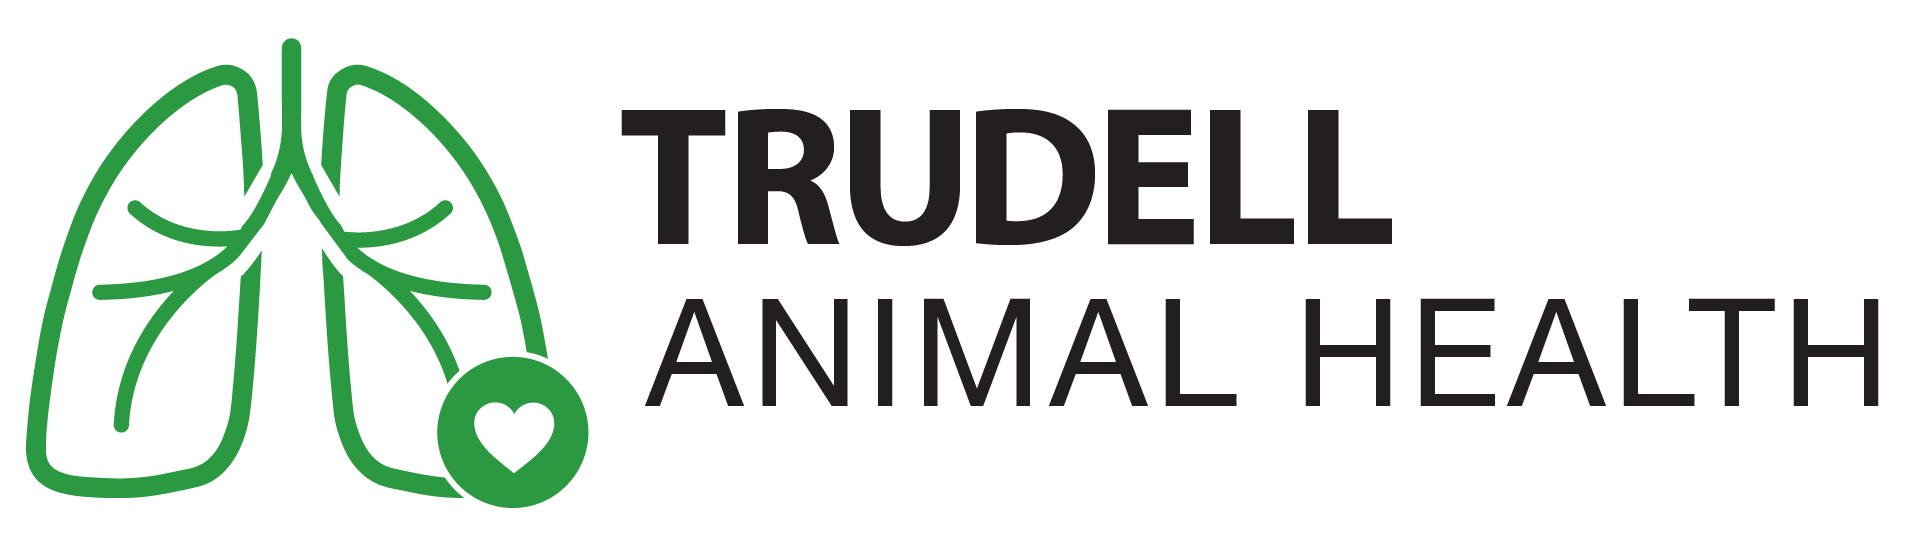 Trudell Animal Health logo